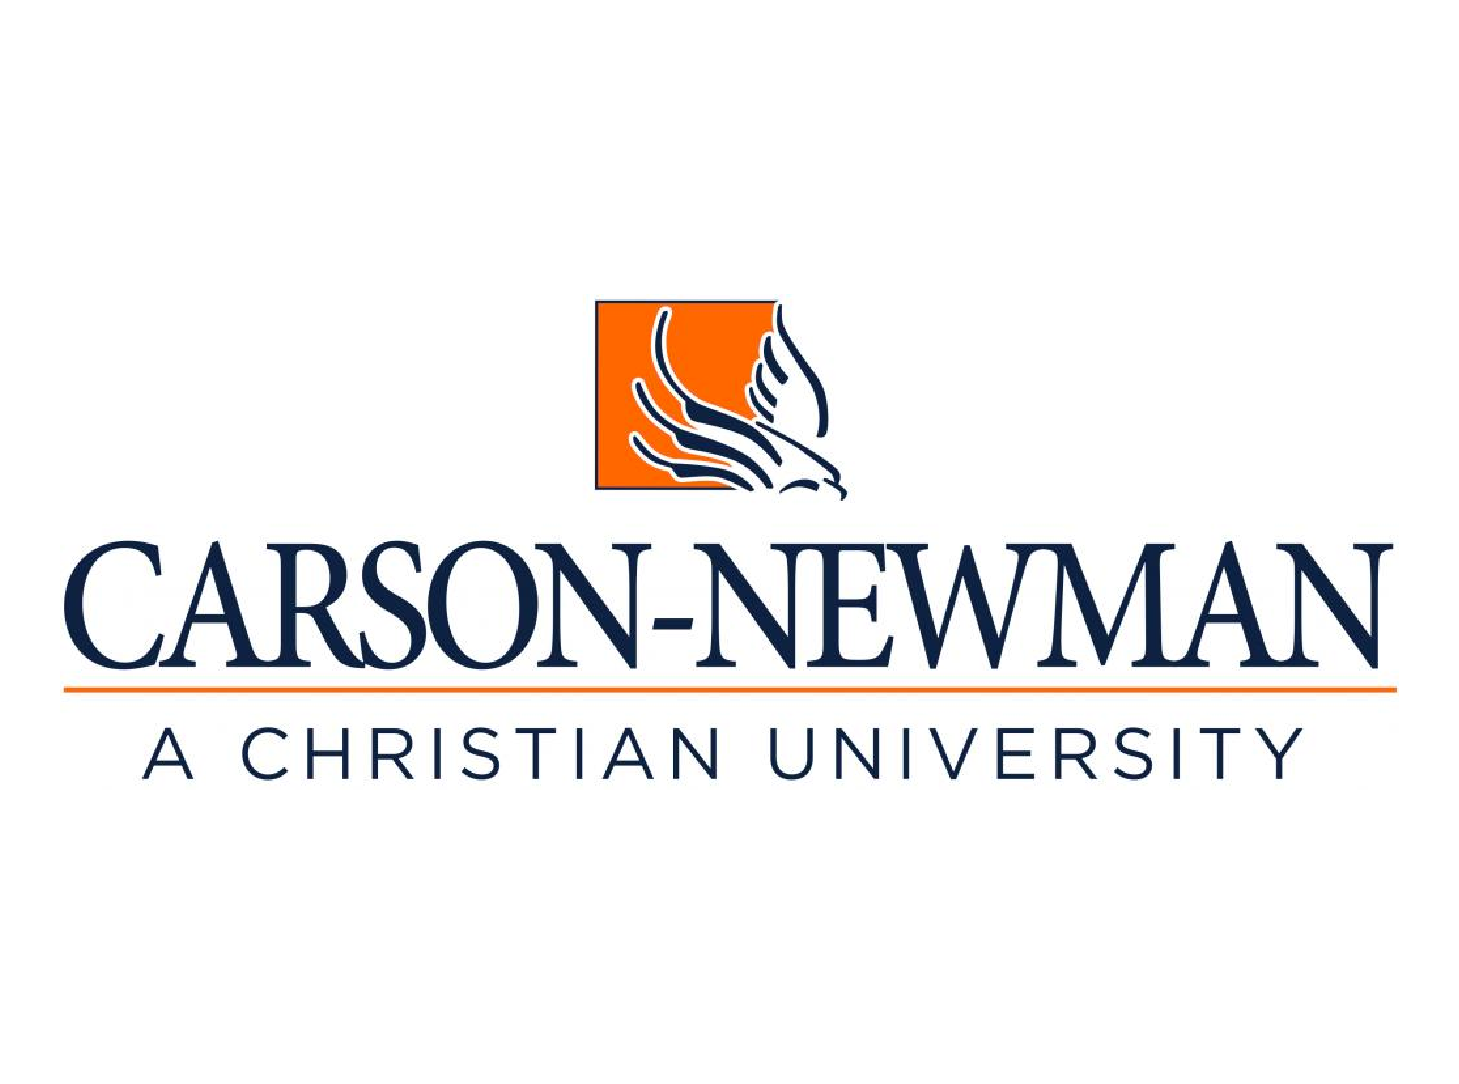 Universidad Carson Newman